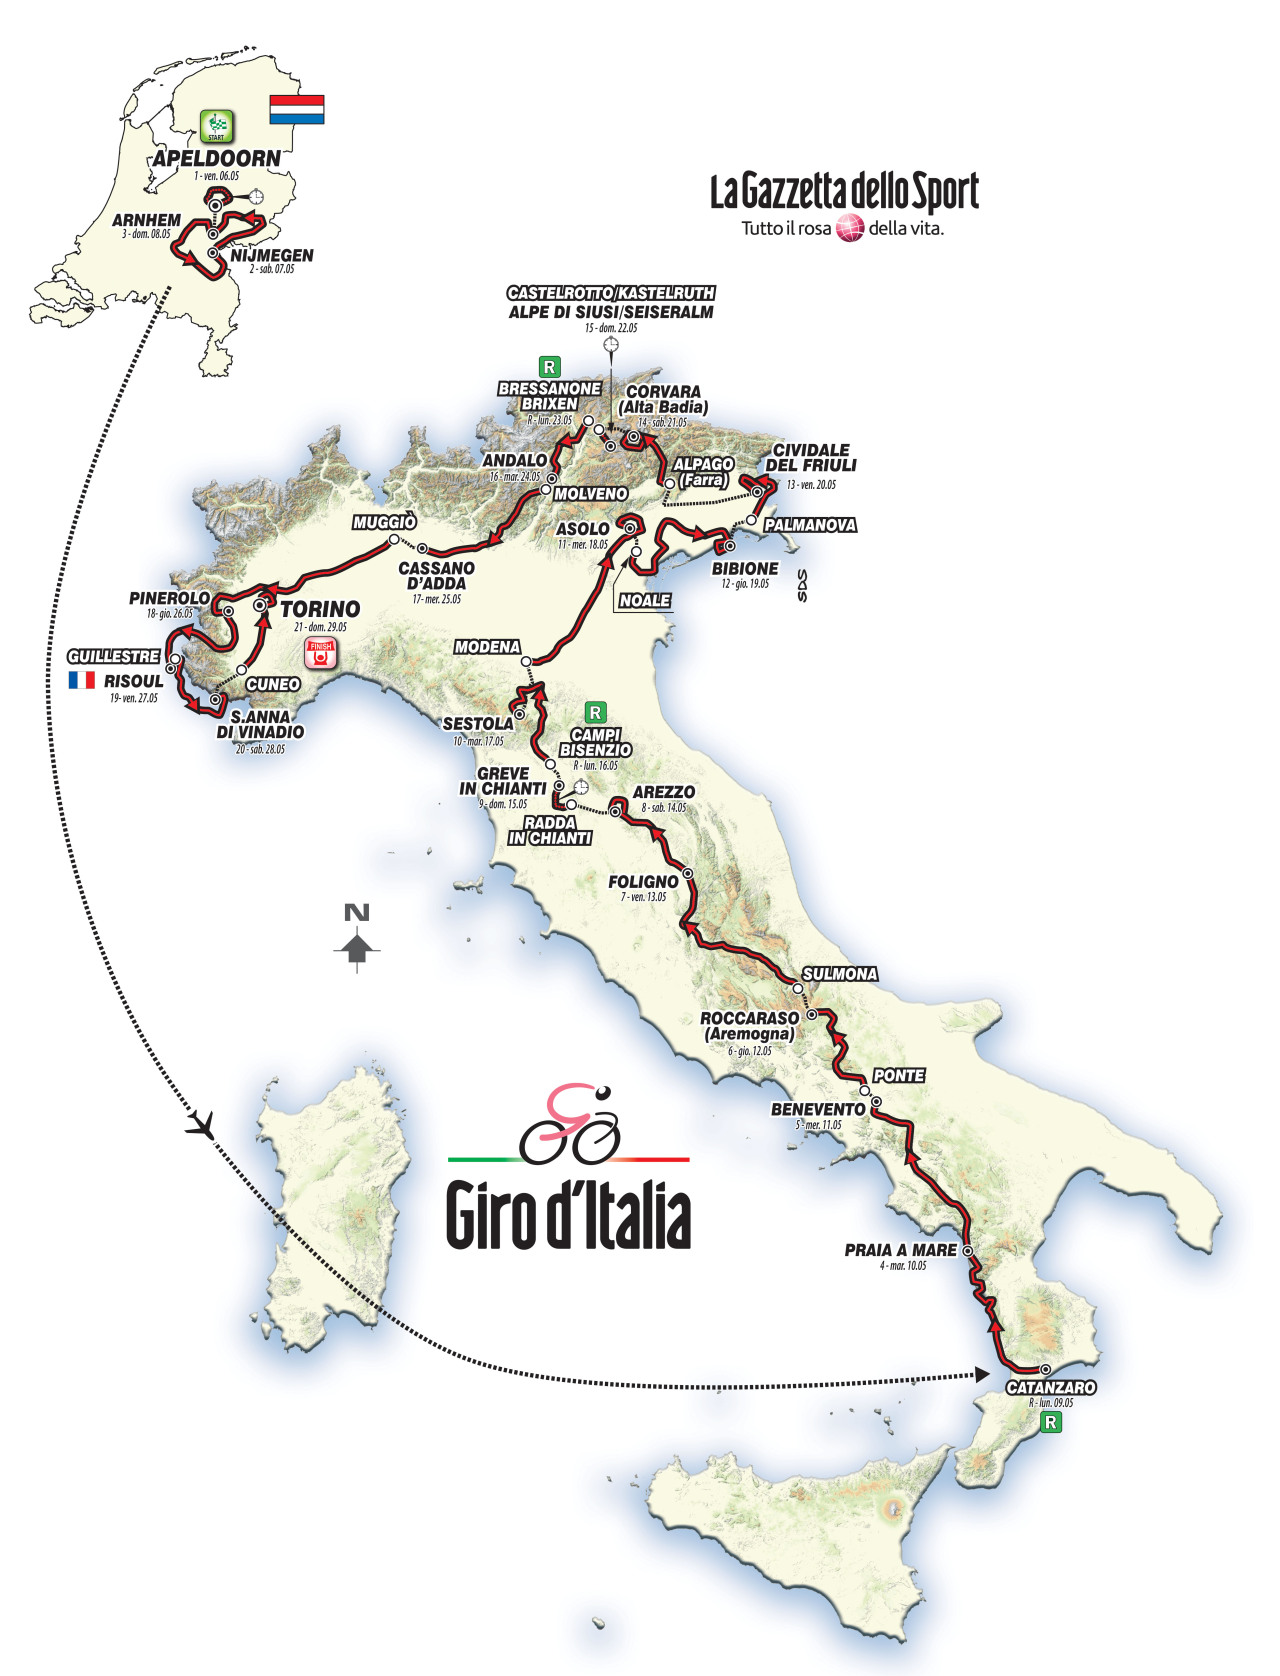 Giro d'Italia map 2016